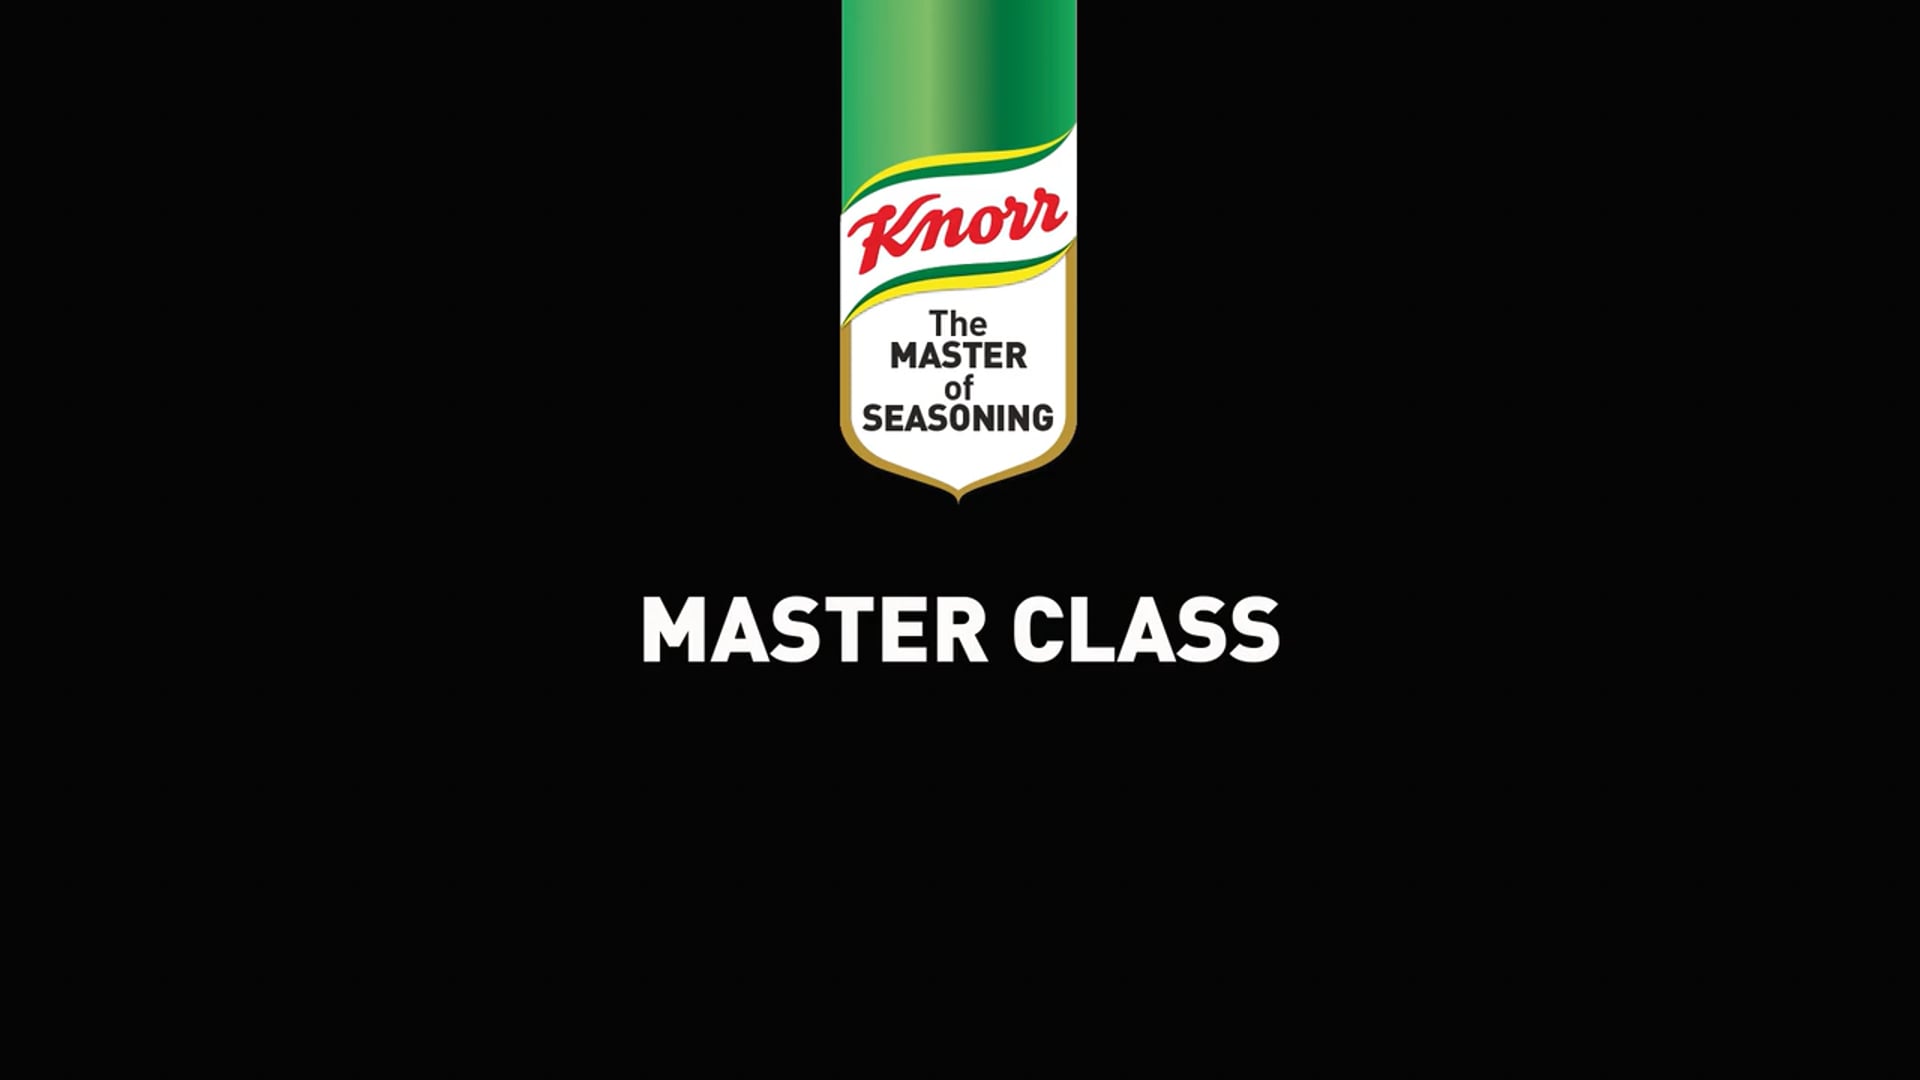 Knorr The Master of Seasoning